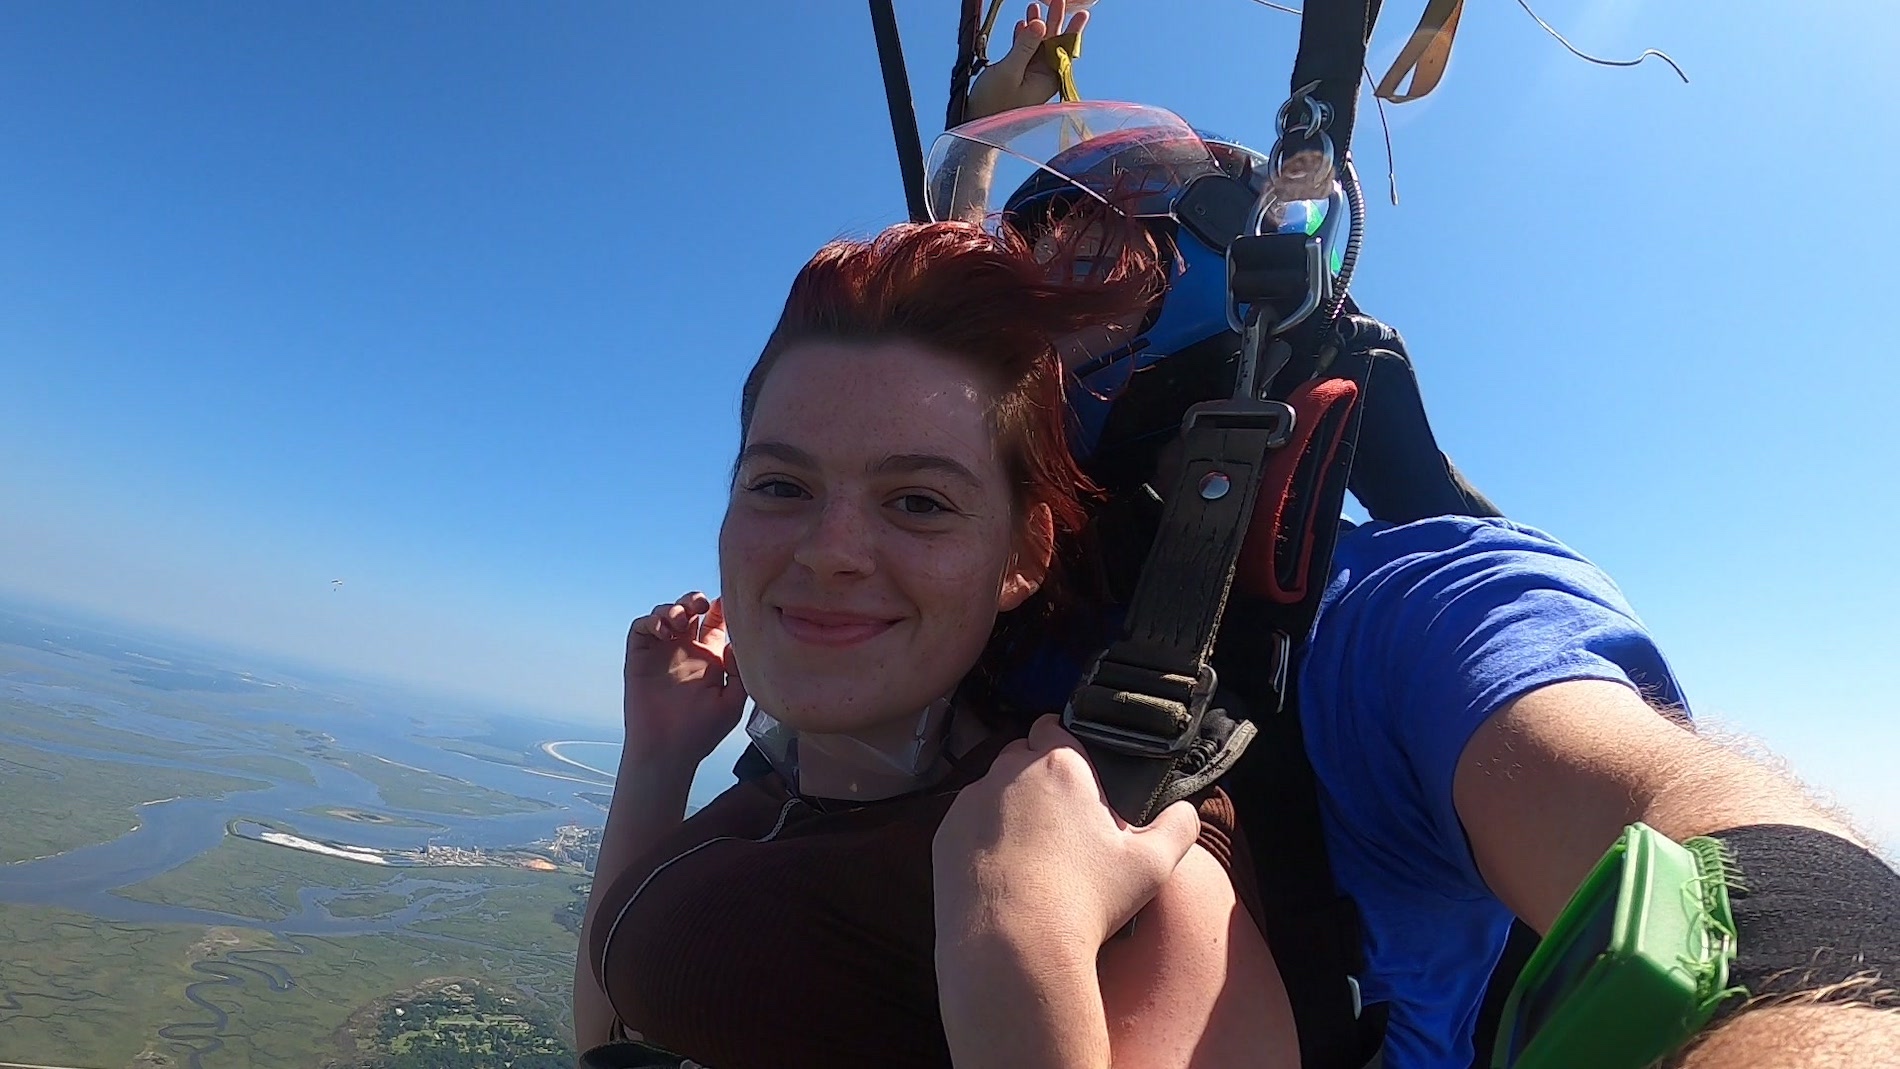 Skydive Amelia Island selfie